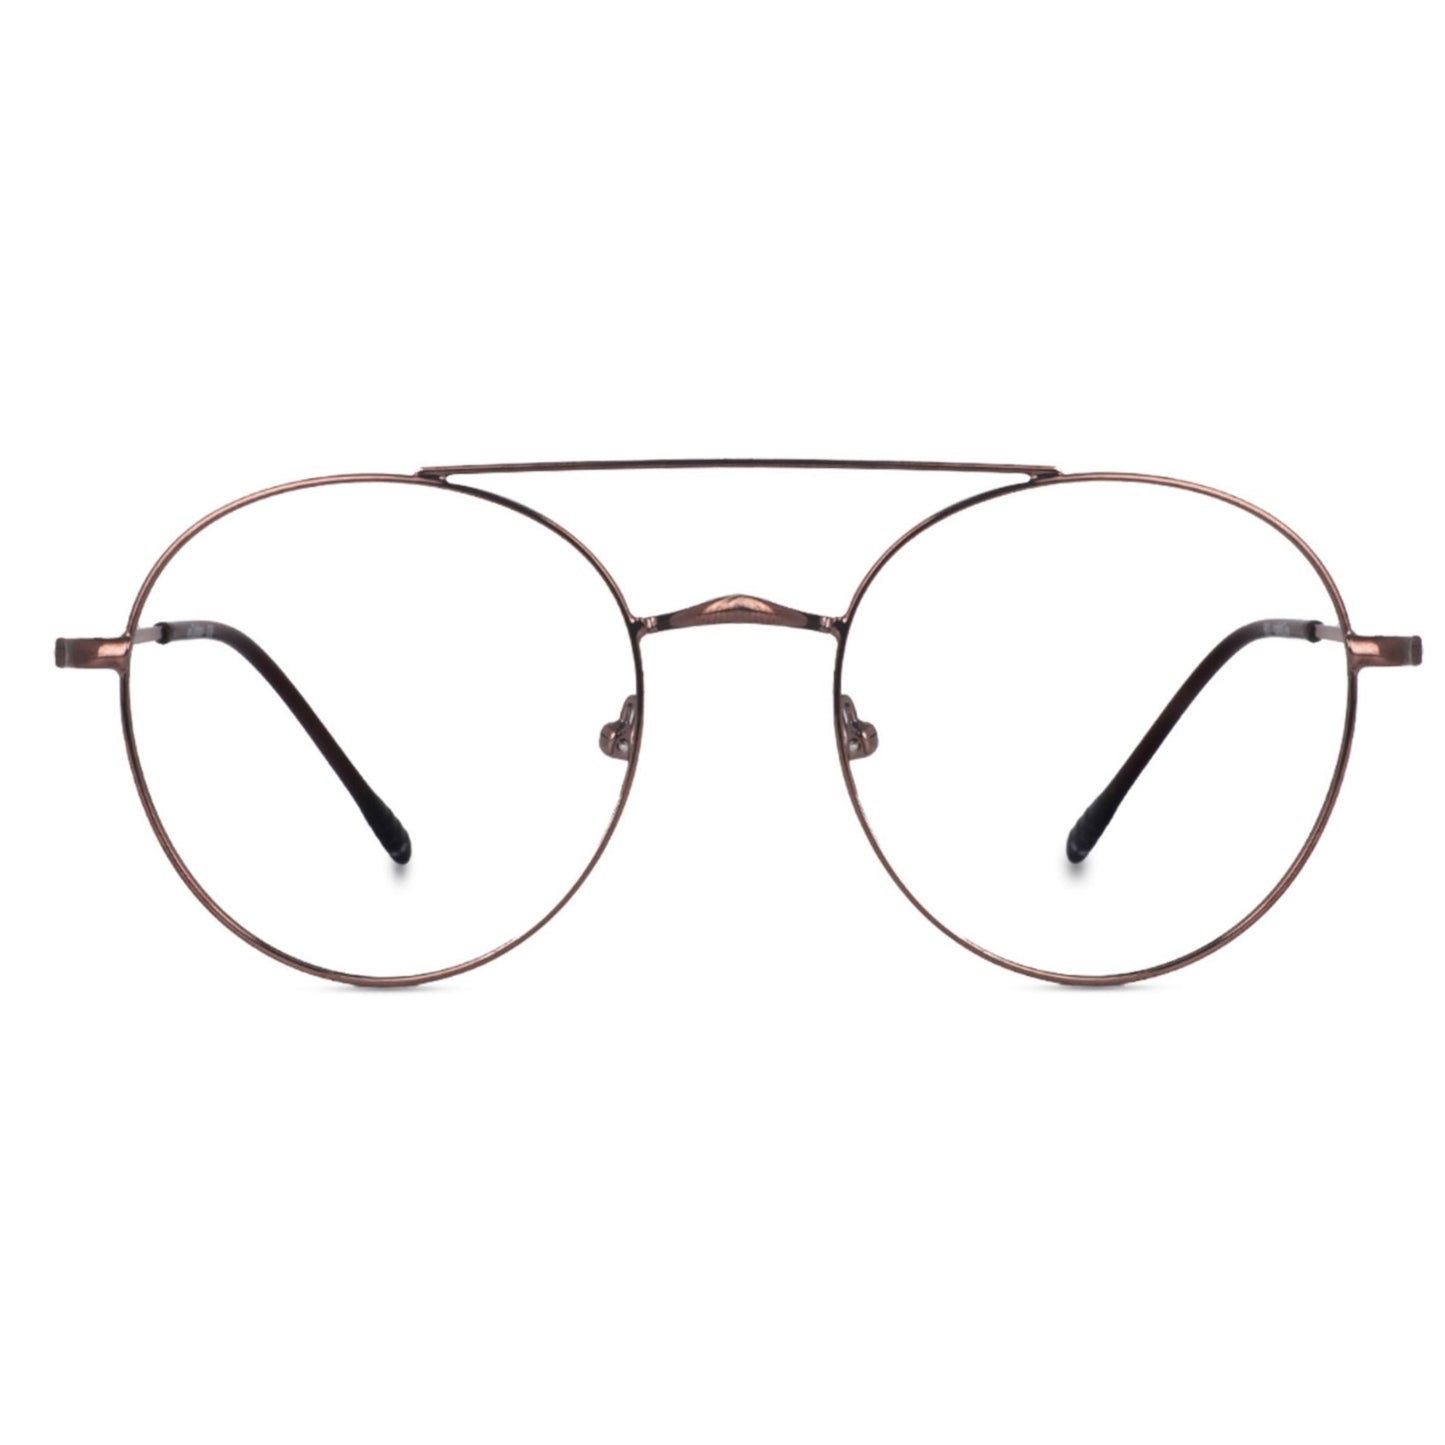 Loscomun Computer Glasses Brown Round Eyeglasses